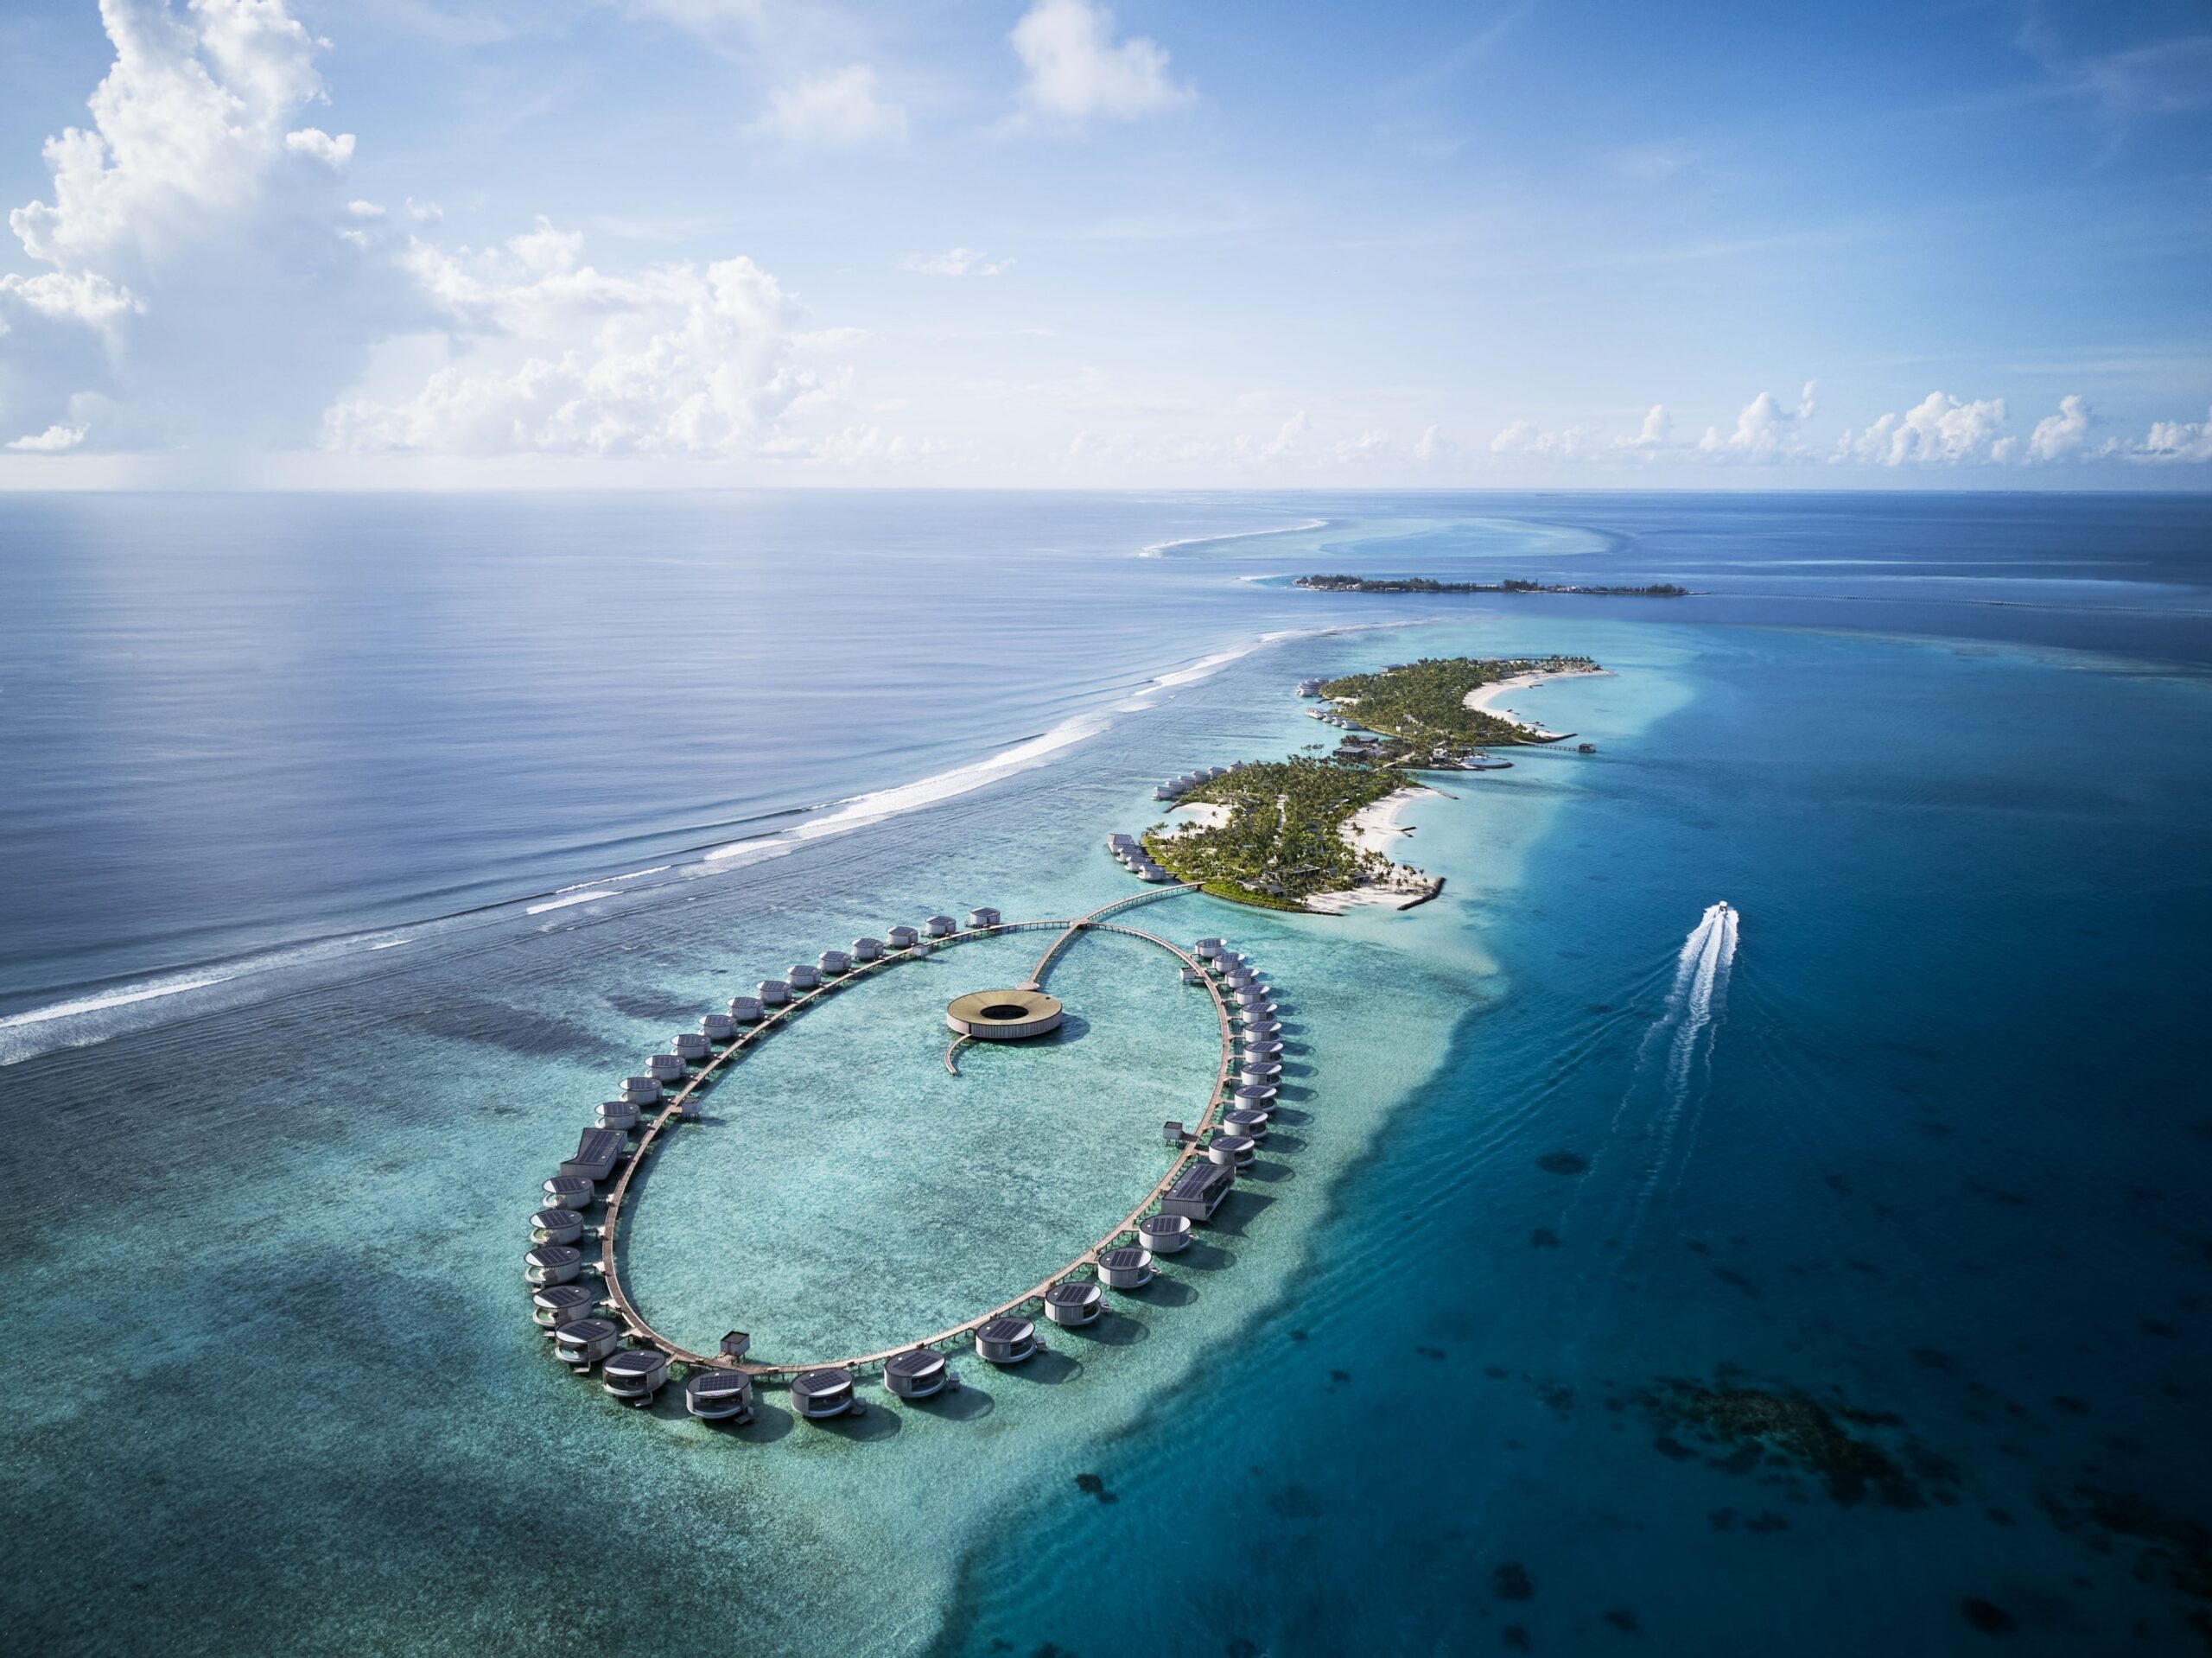 Birds eye view of the Ritz-Carlton Maldives, Fari Islands